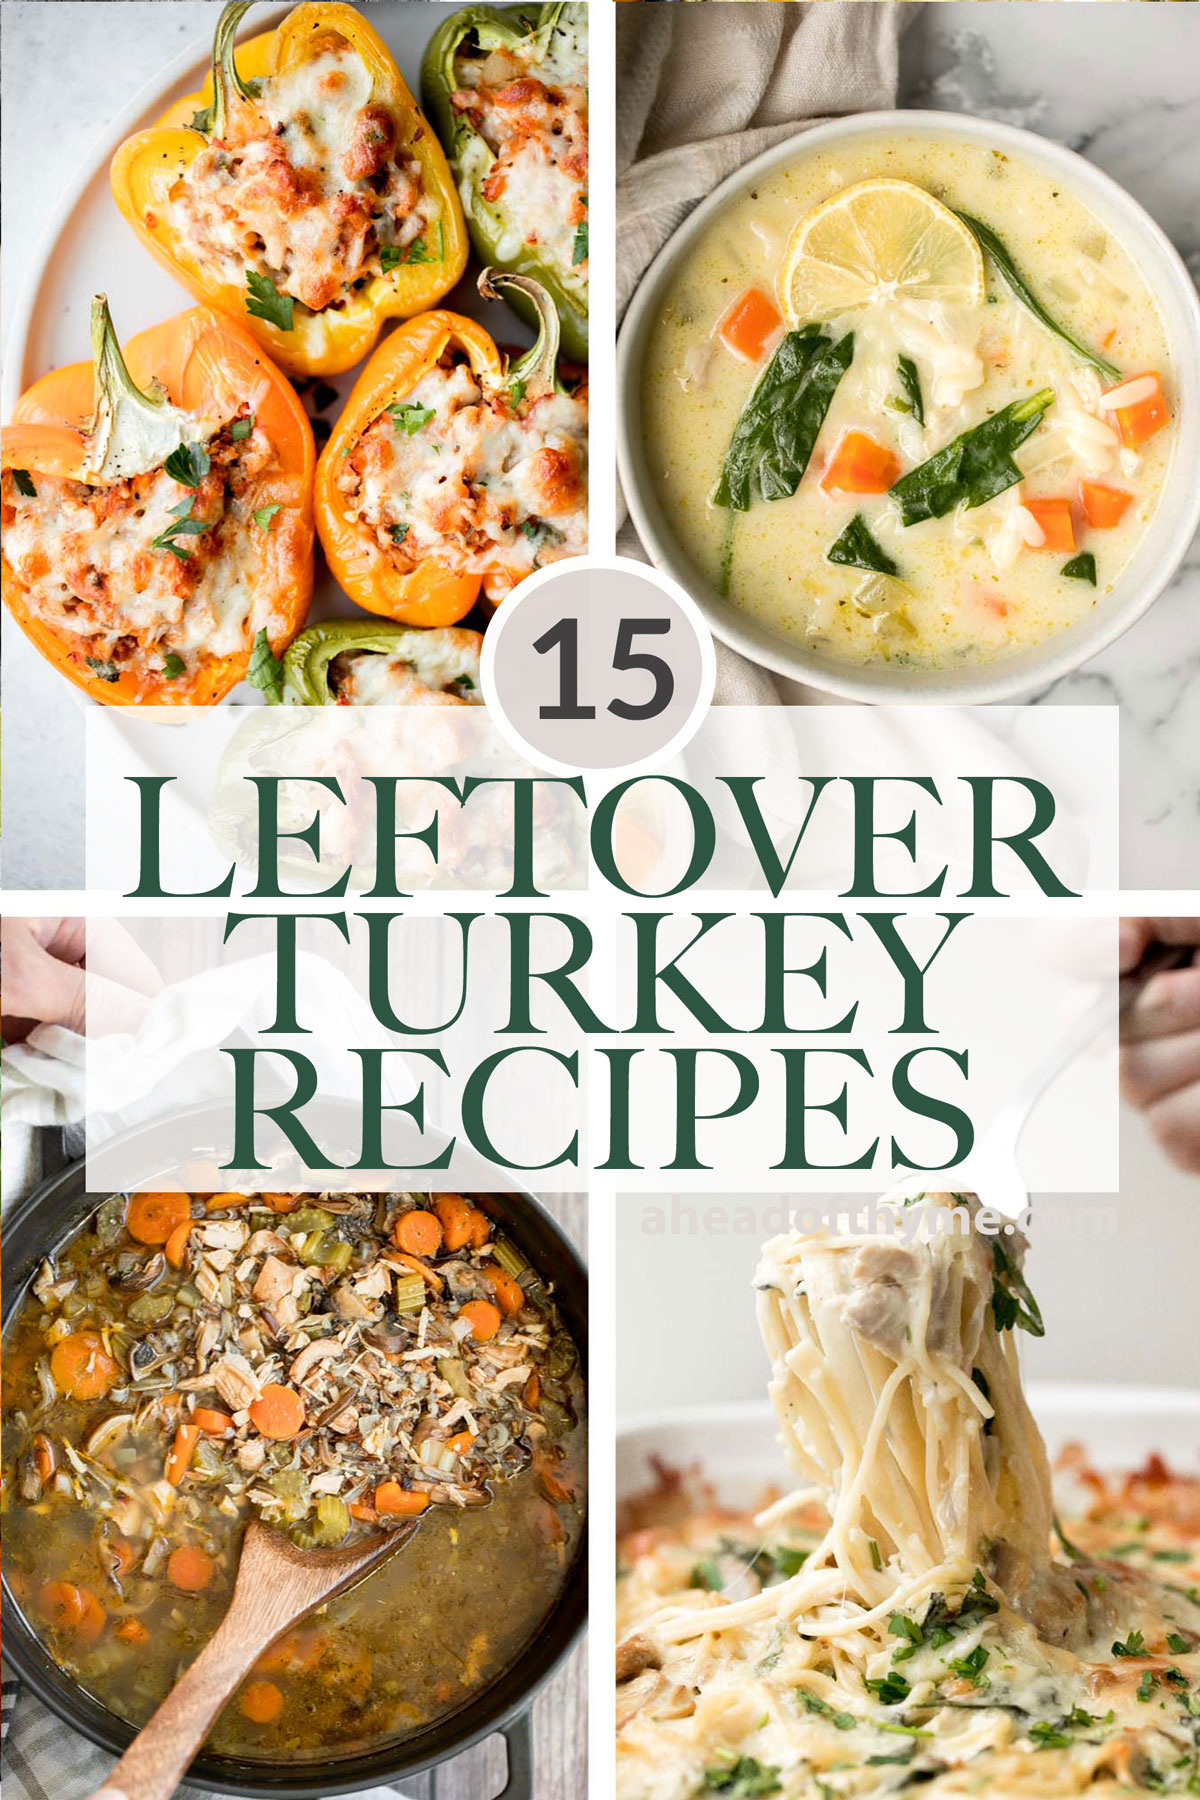 15 Leftover Turkey Recipes